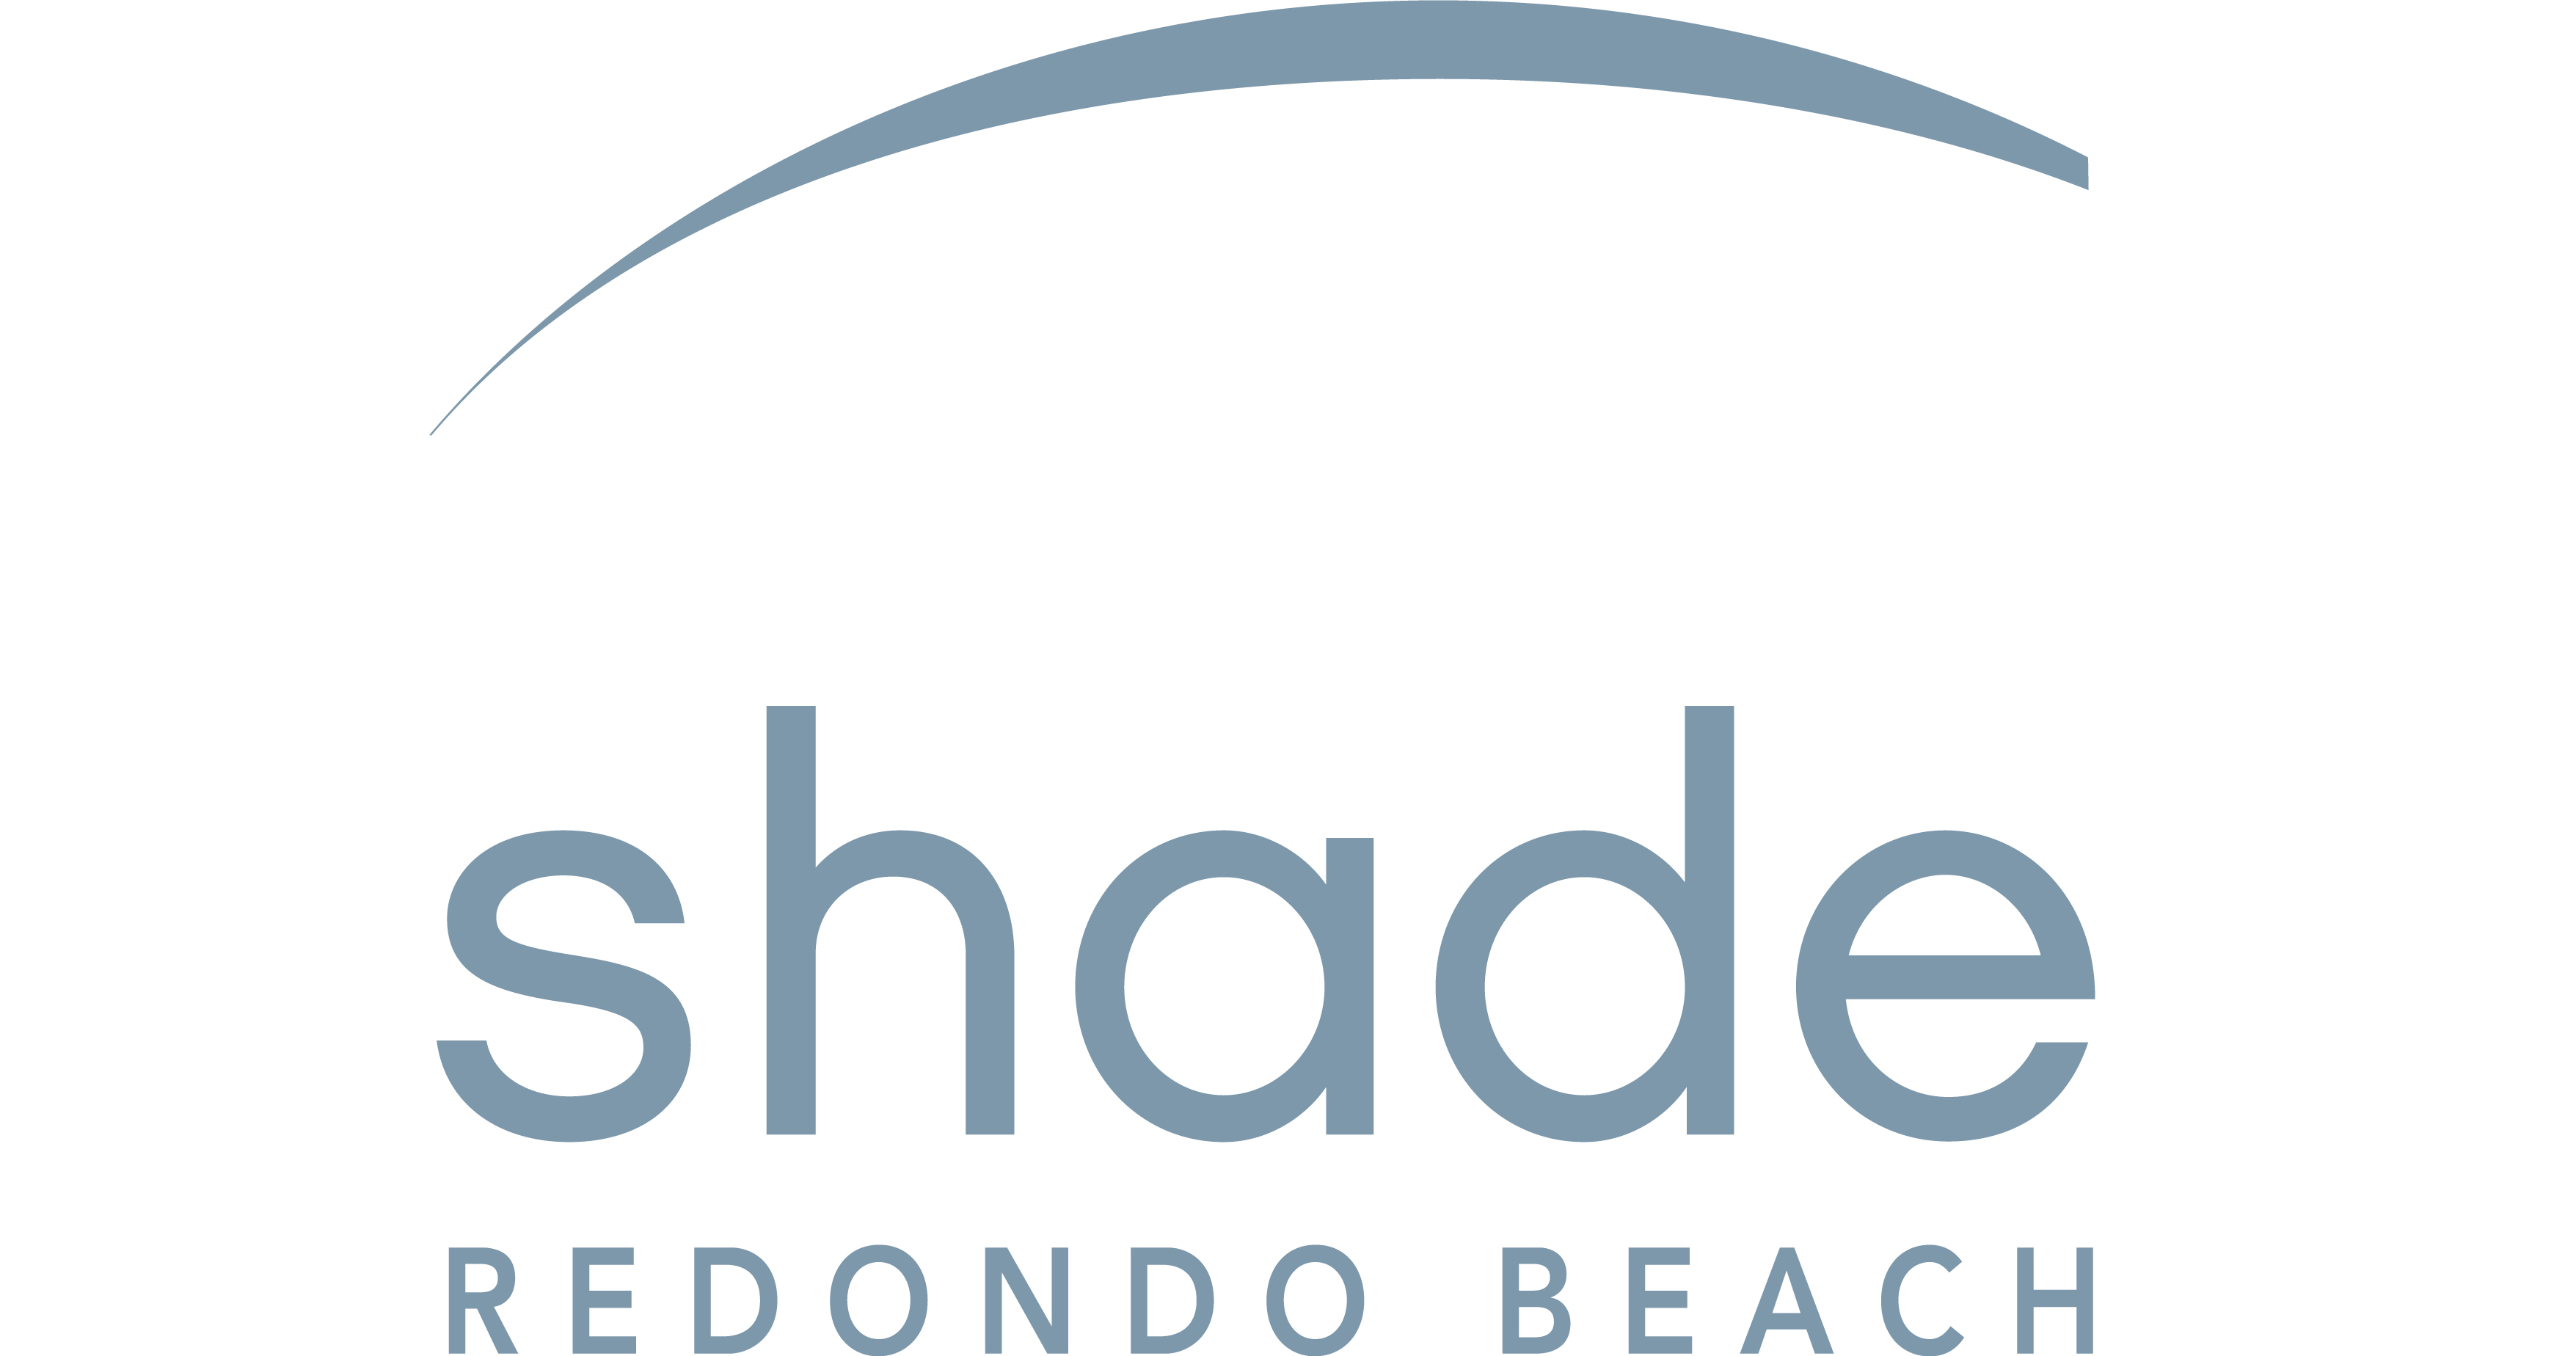 REDONDO BEACH HOSPITALITY COMPANY LLC Application Successful